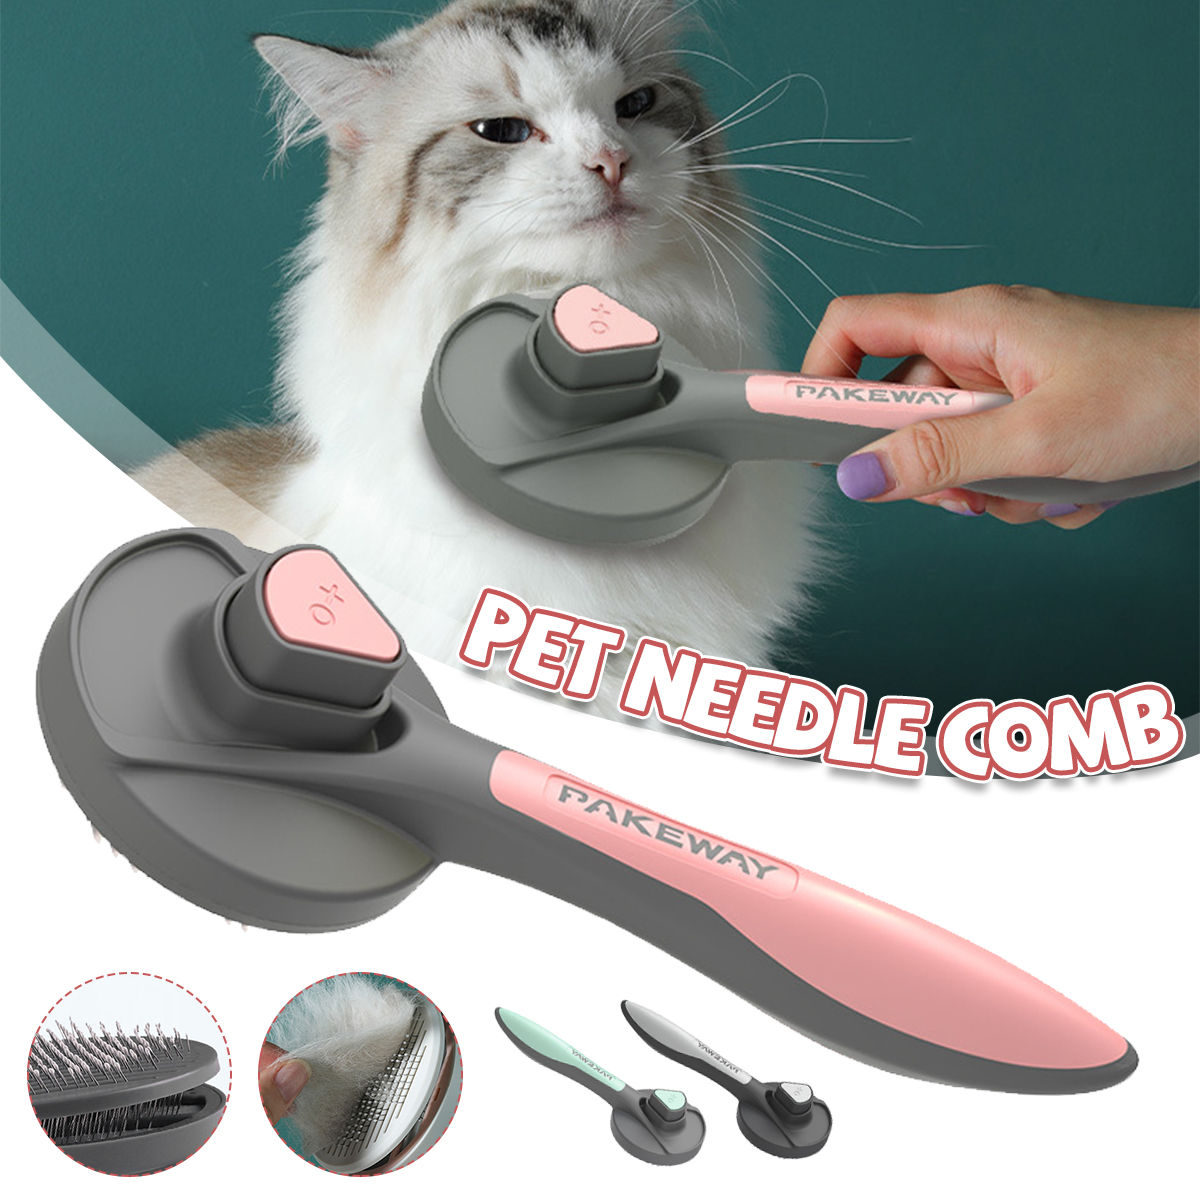 Pet-Hair-Brush-Remover-Dog-Cat-Comb-Needle-Reduce-Grooming-Bath-Deshedding-Tool-1958714-1